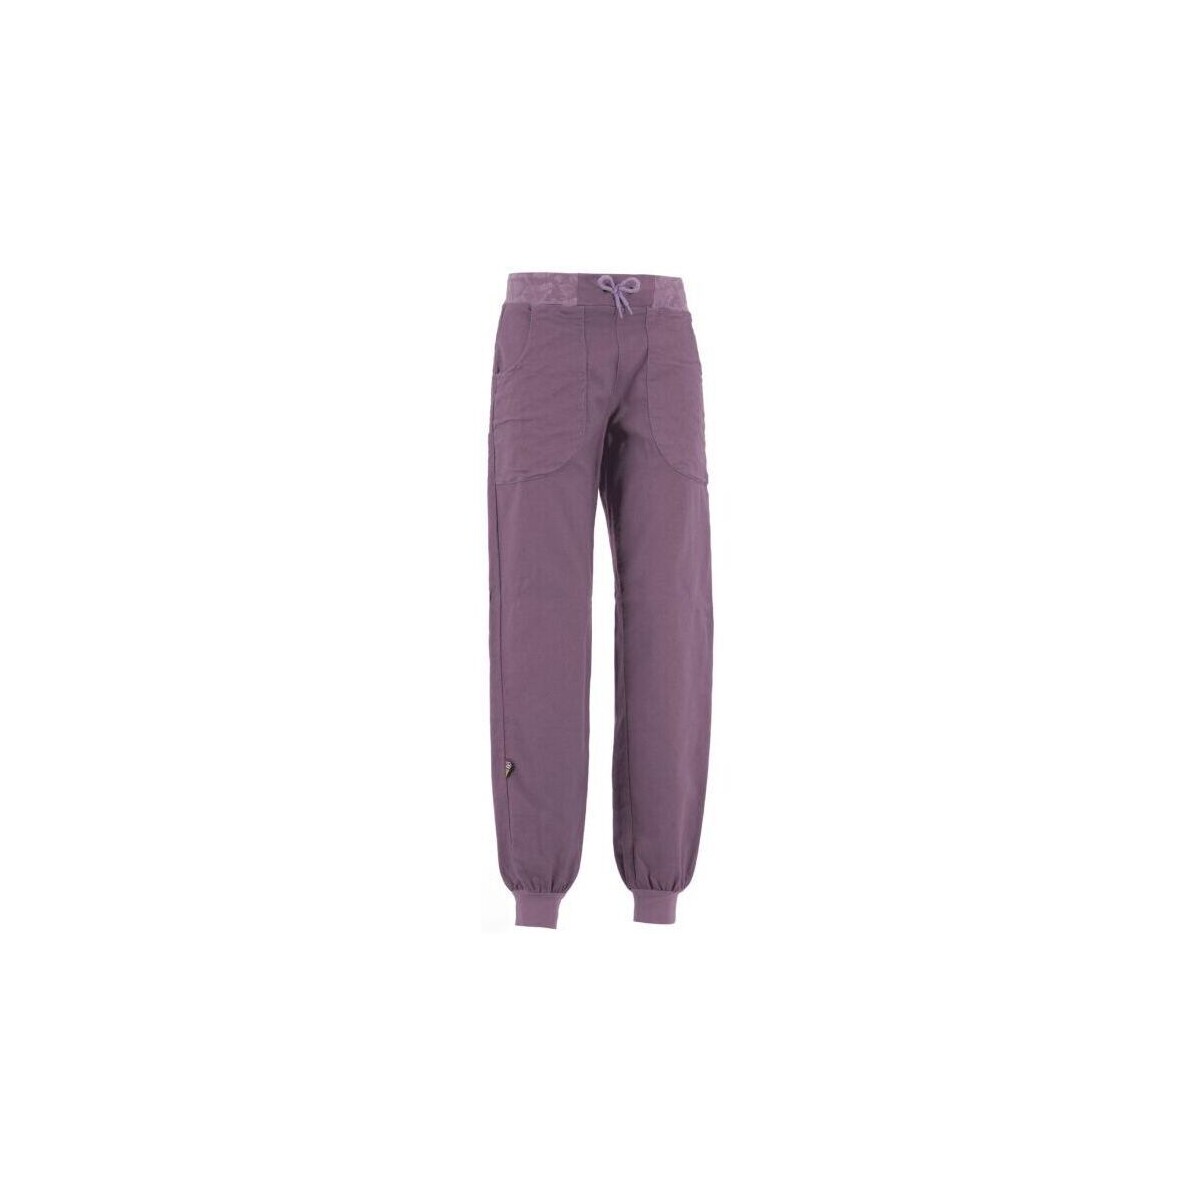 textil Mujer Pantalones de chándal E9 Pantalones Aria 2 Mujer Heather Violeta